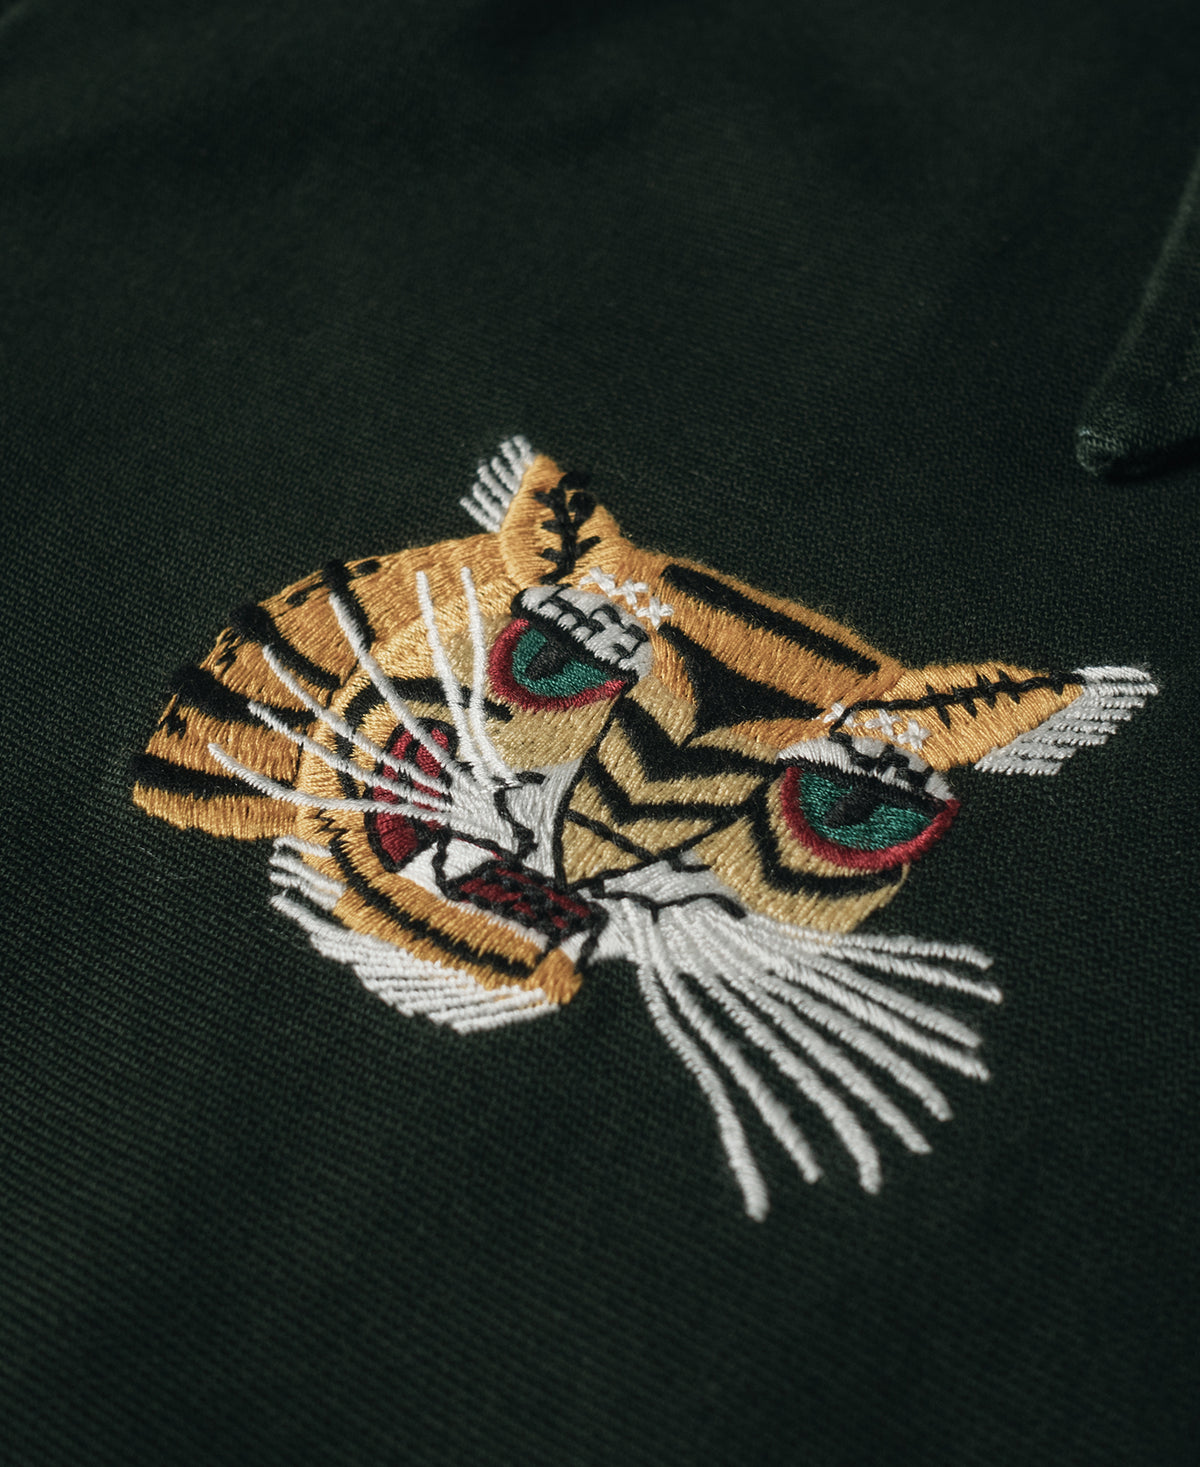 Fox Embroidery Vietnam Souvenir jackets